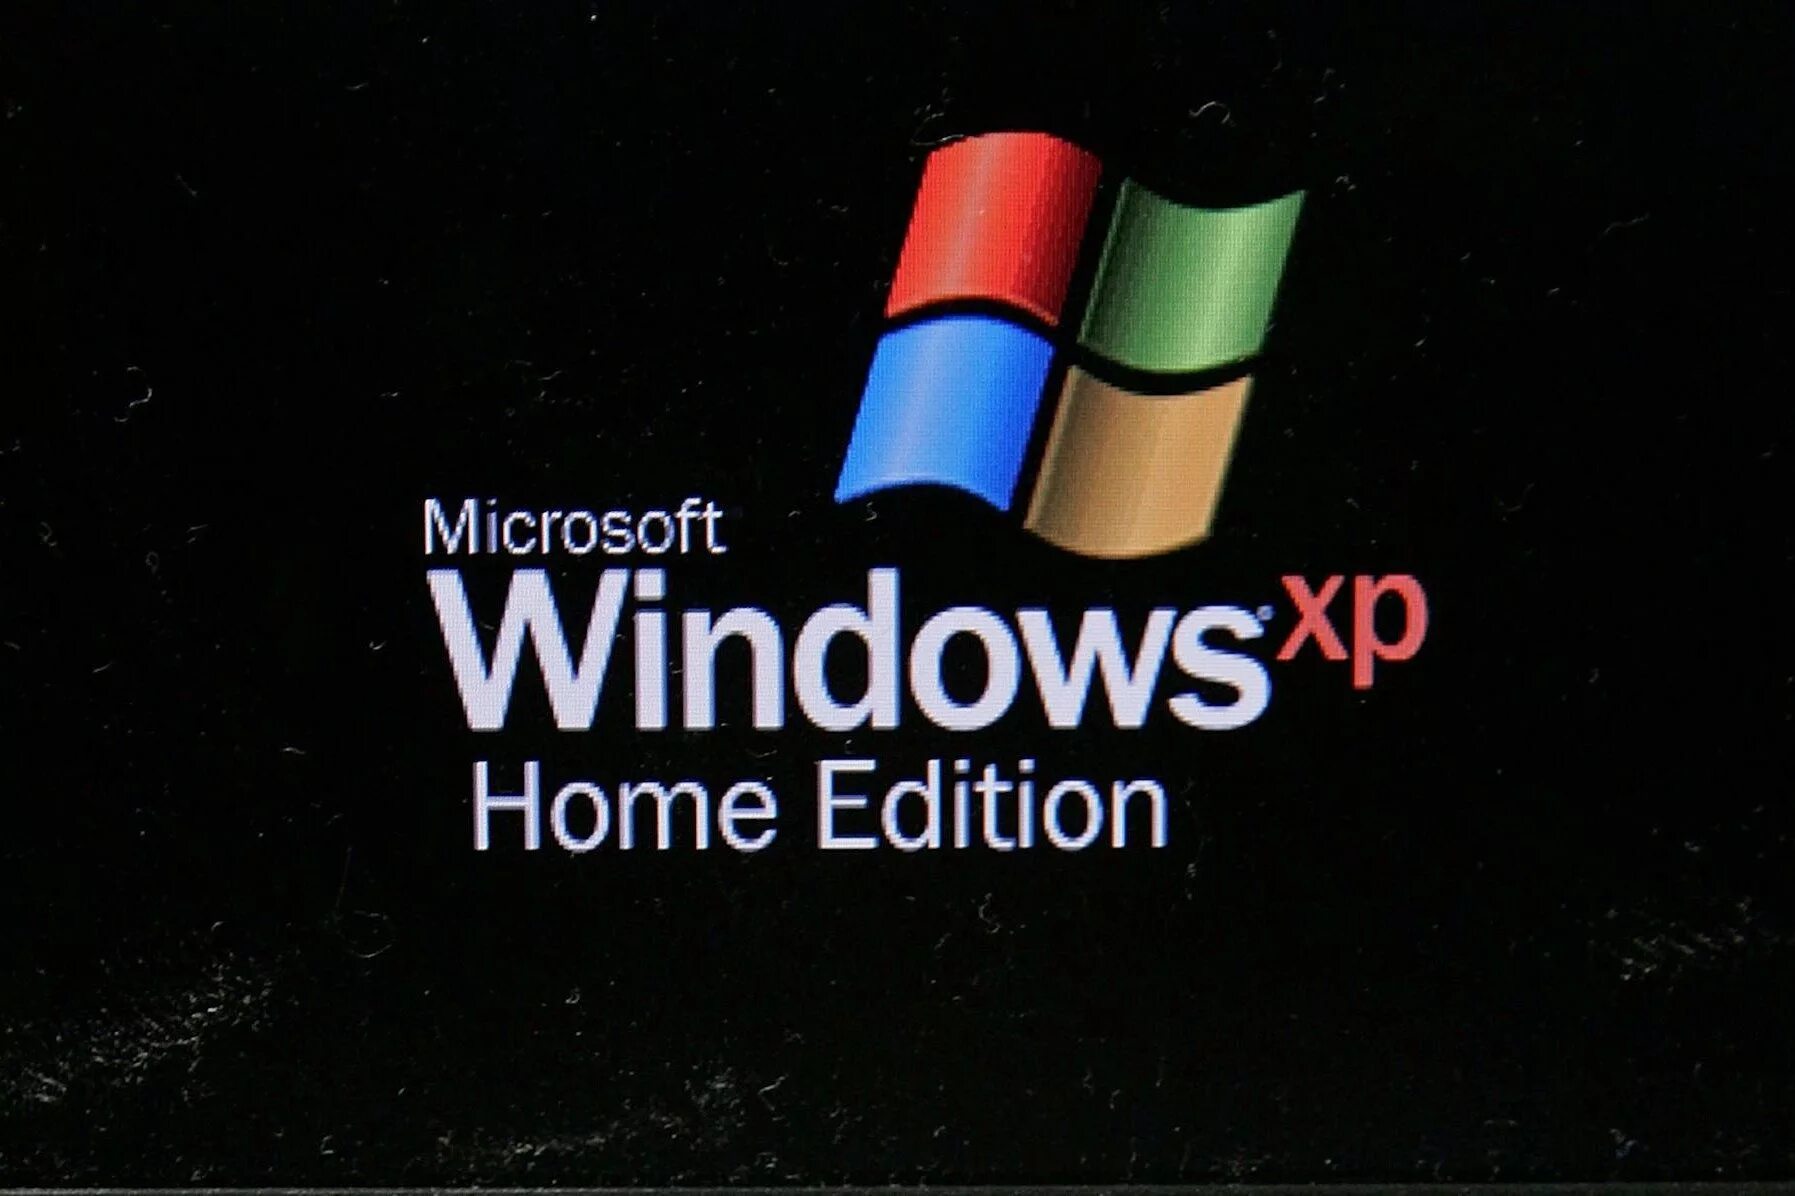 Load win. Загрузка виндовс. Загрузка Windows XP. Загрузка виндовс хр. Экран загрузки Windows XP.